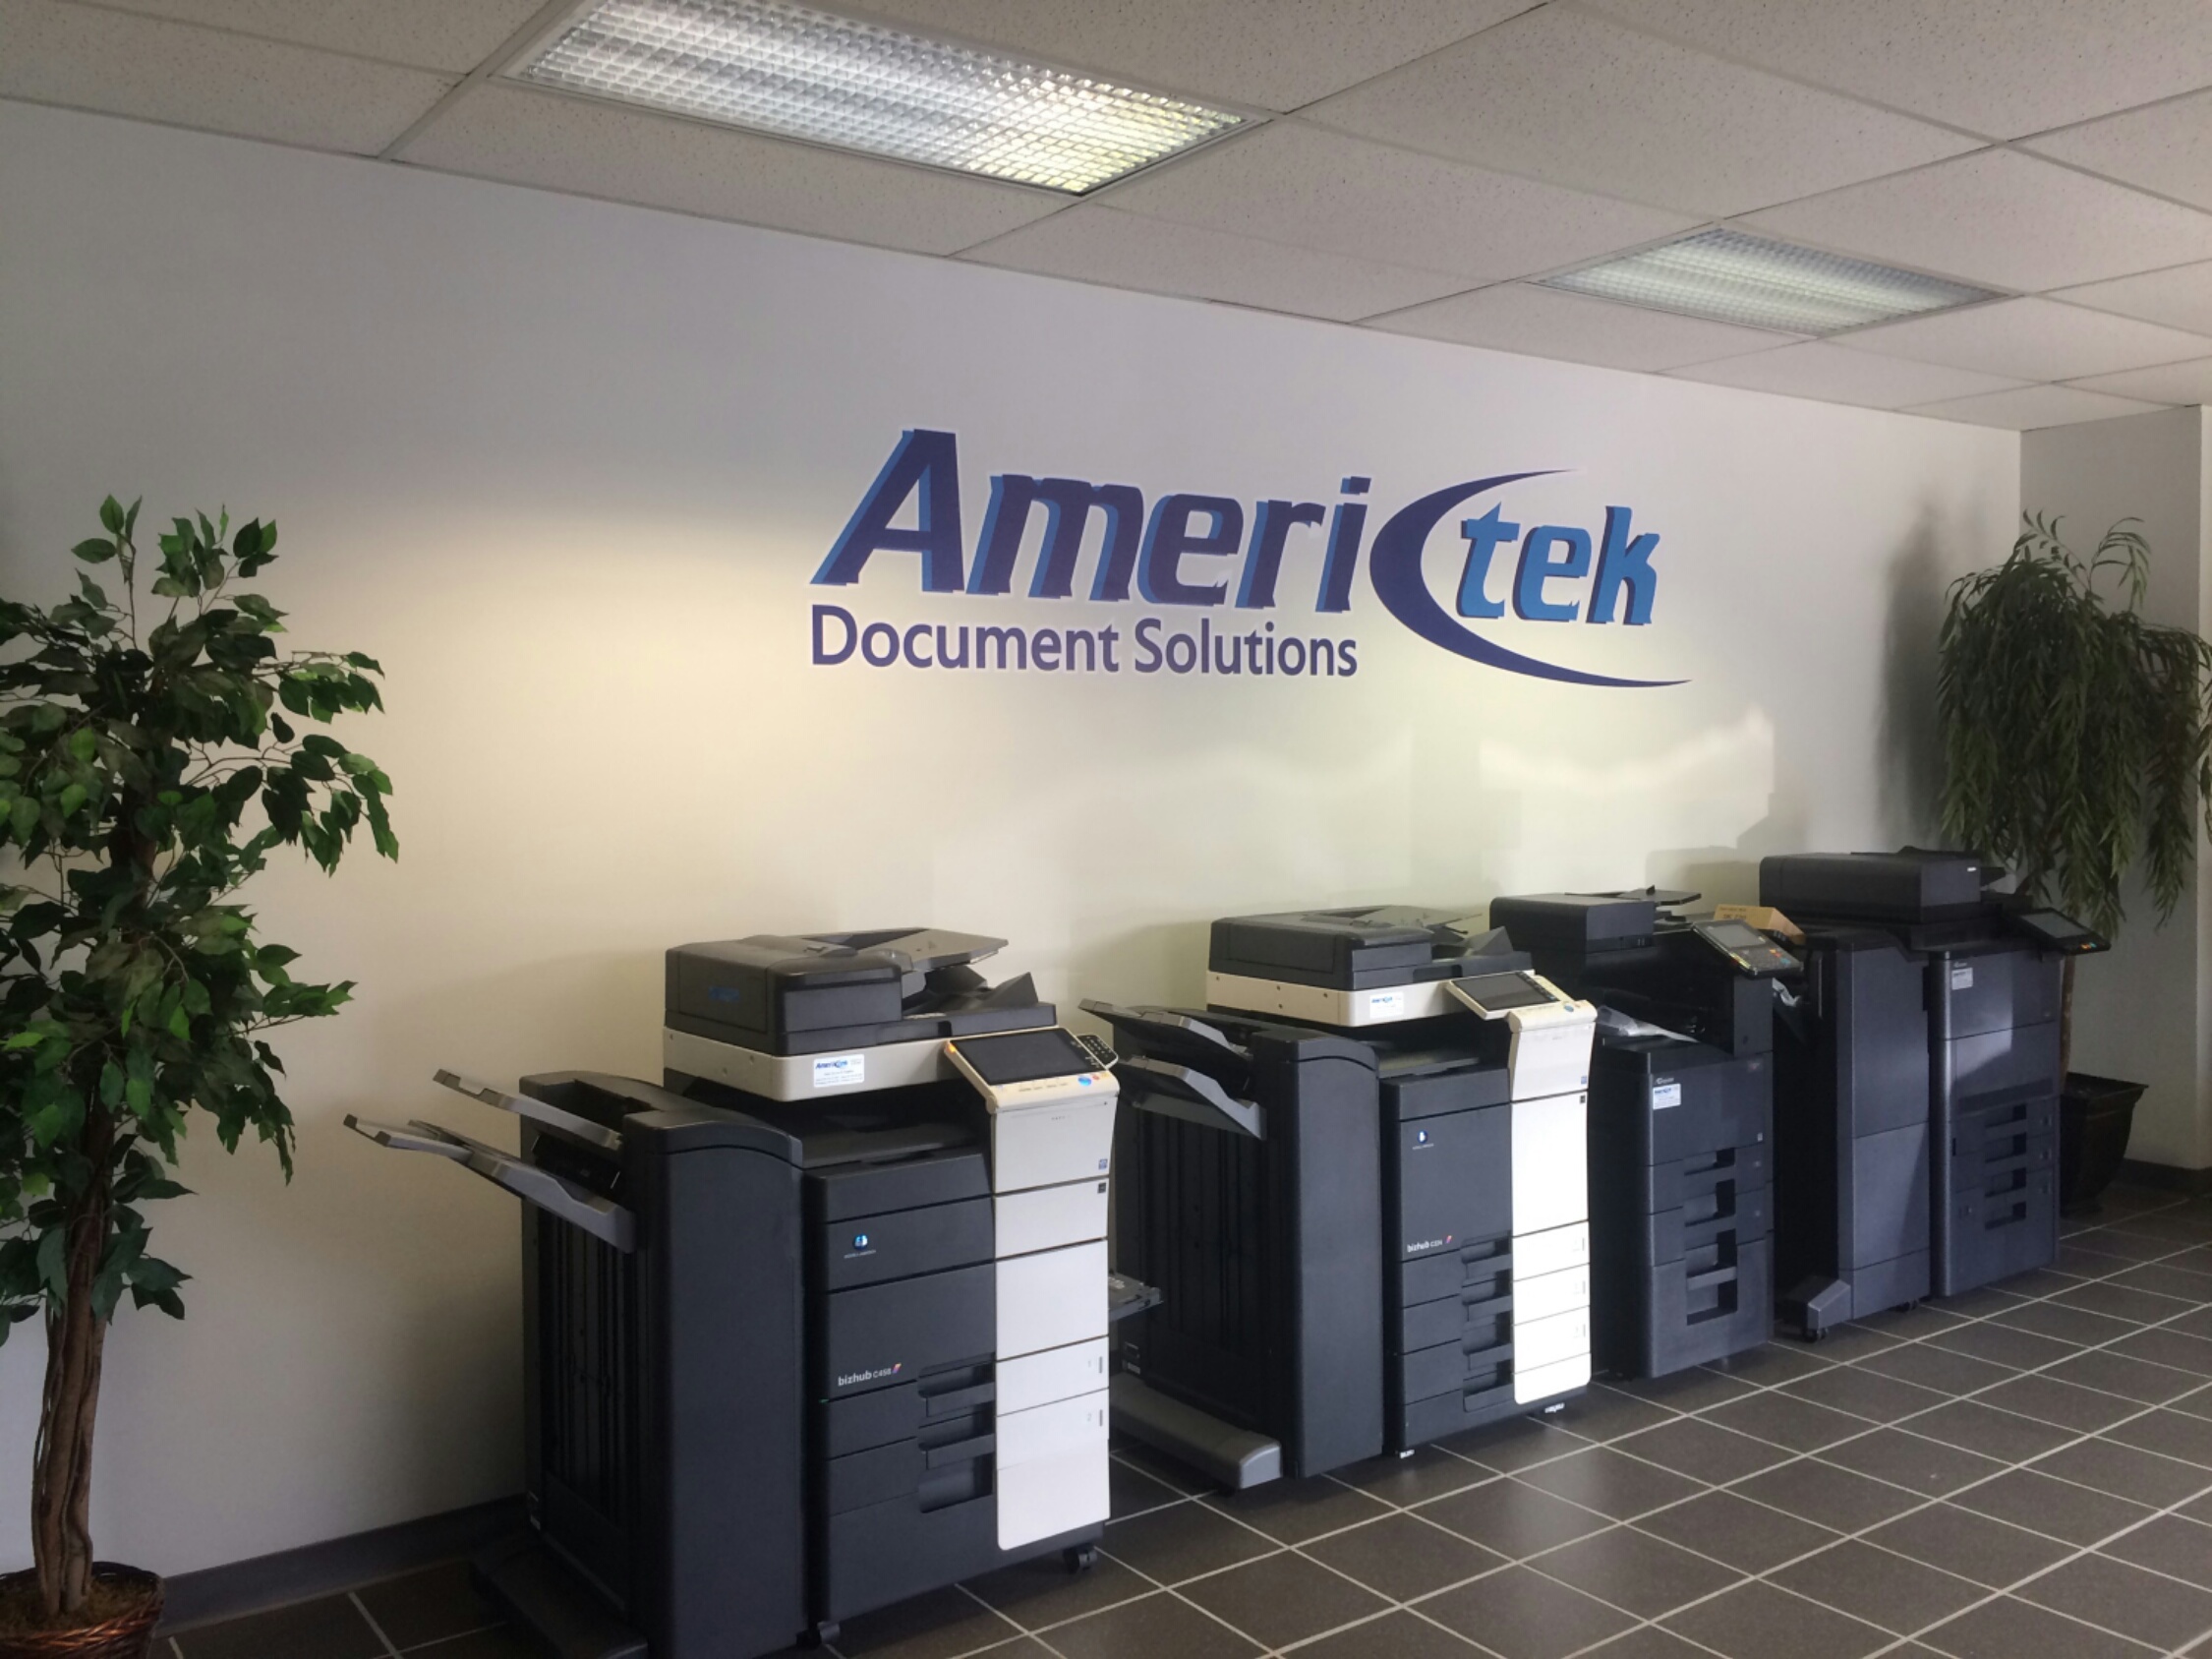 AmericCtek document solutions wall graphic